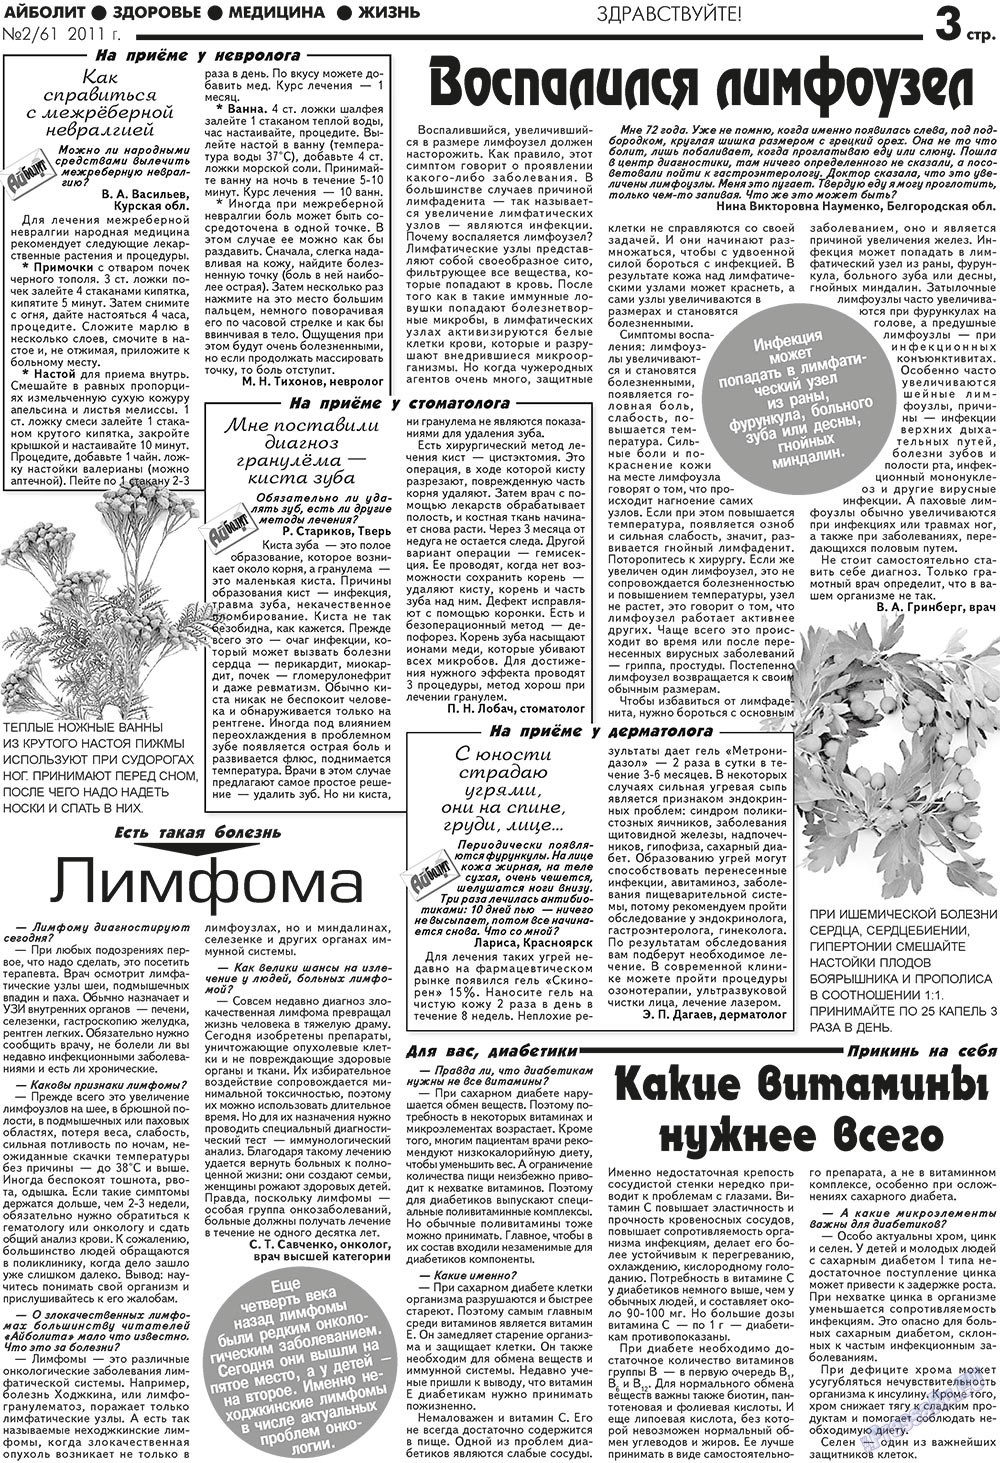 АйБолит (газета). 2011 год, номер 2, стр. 3